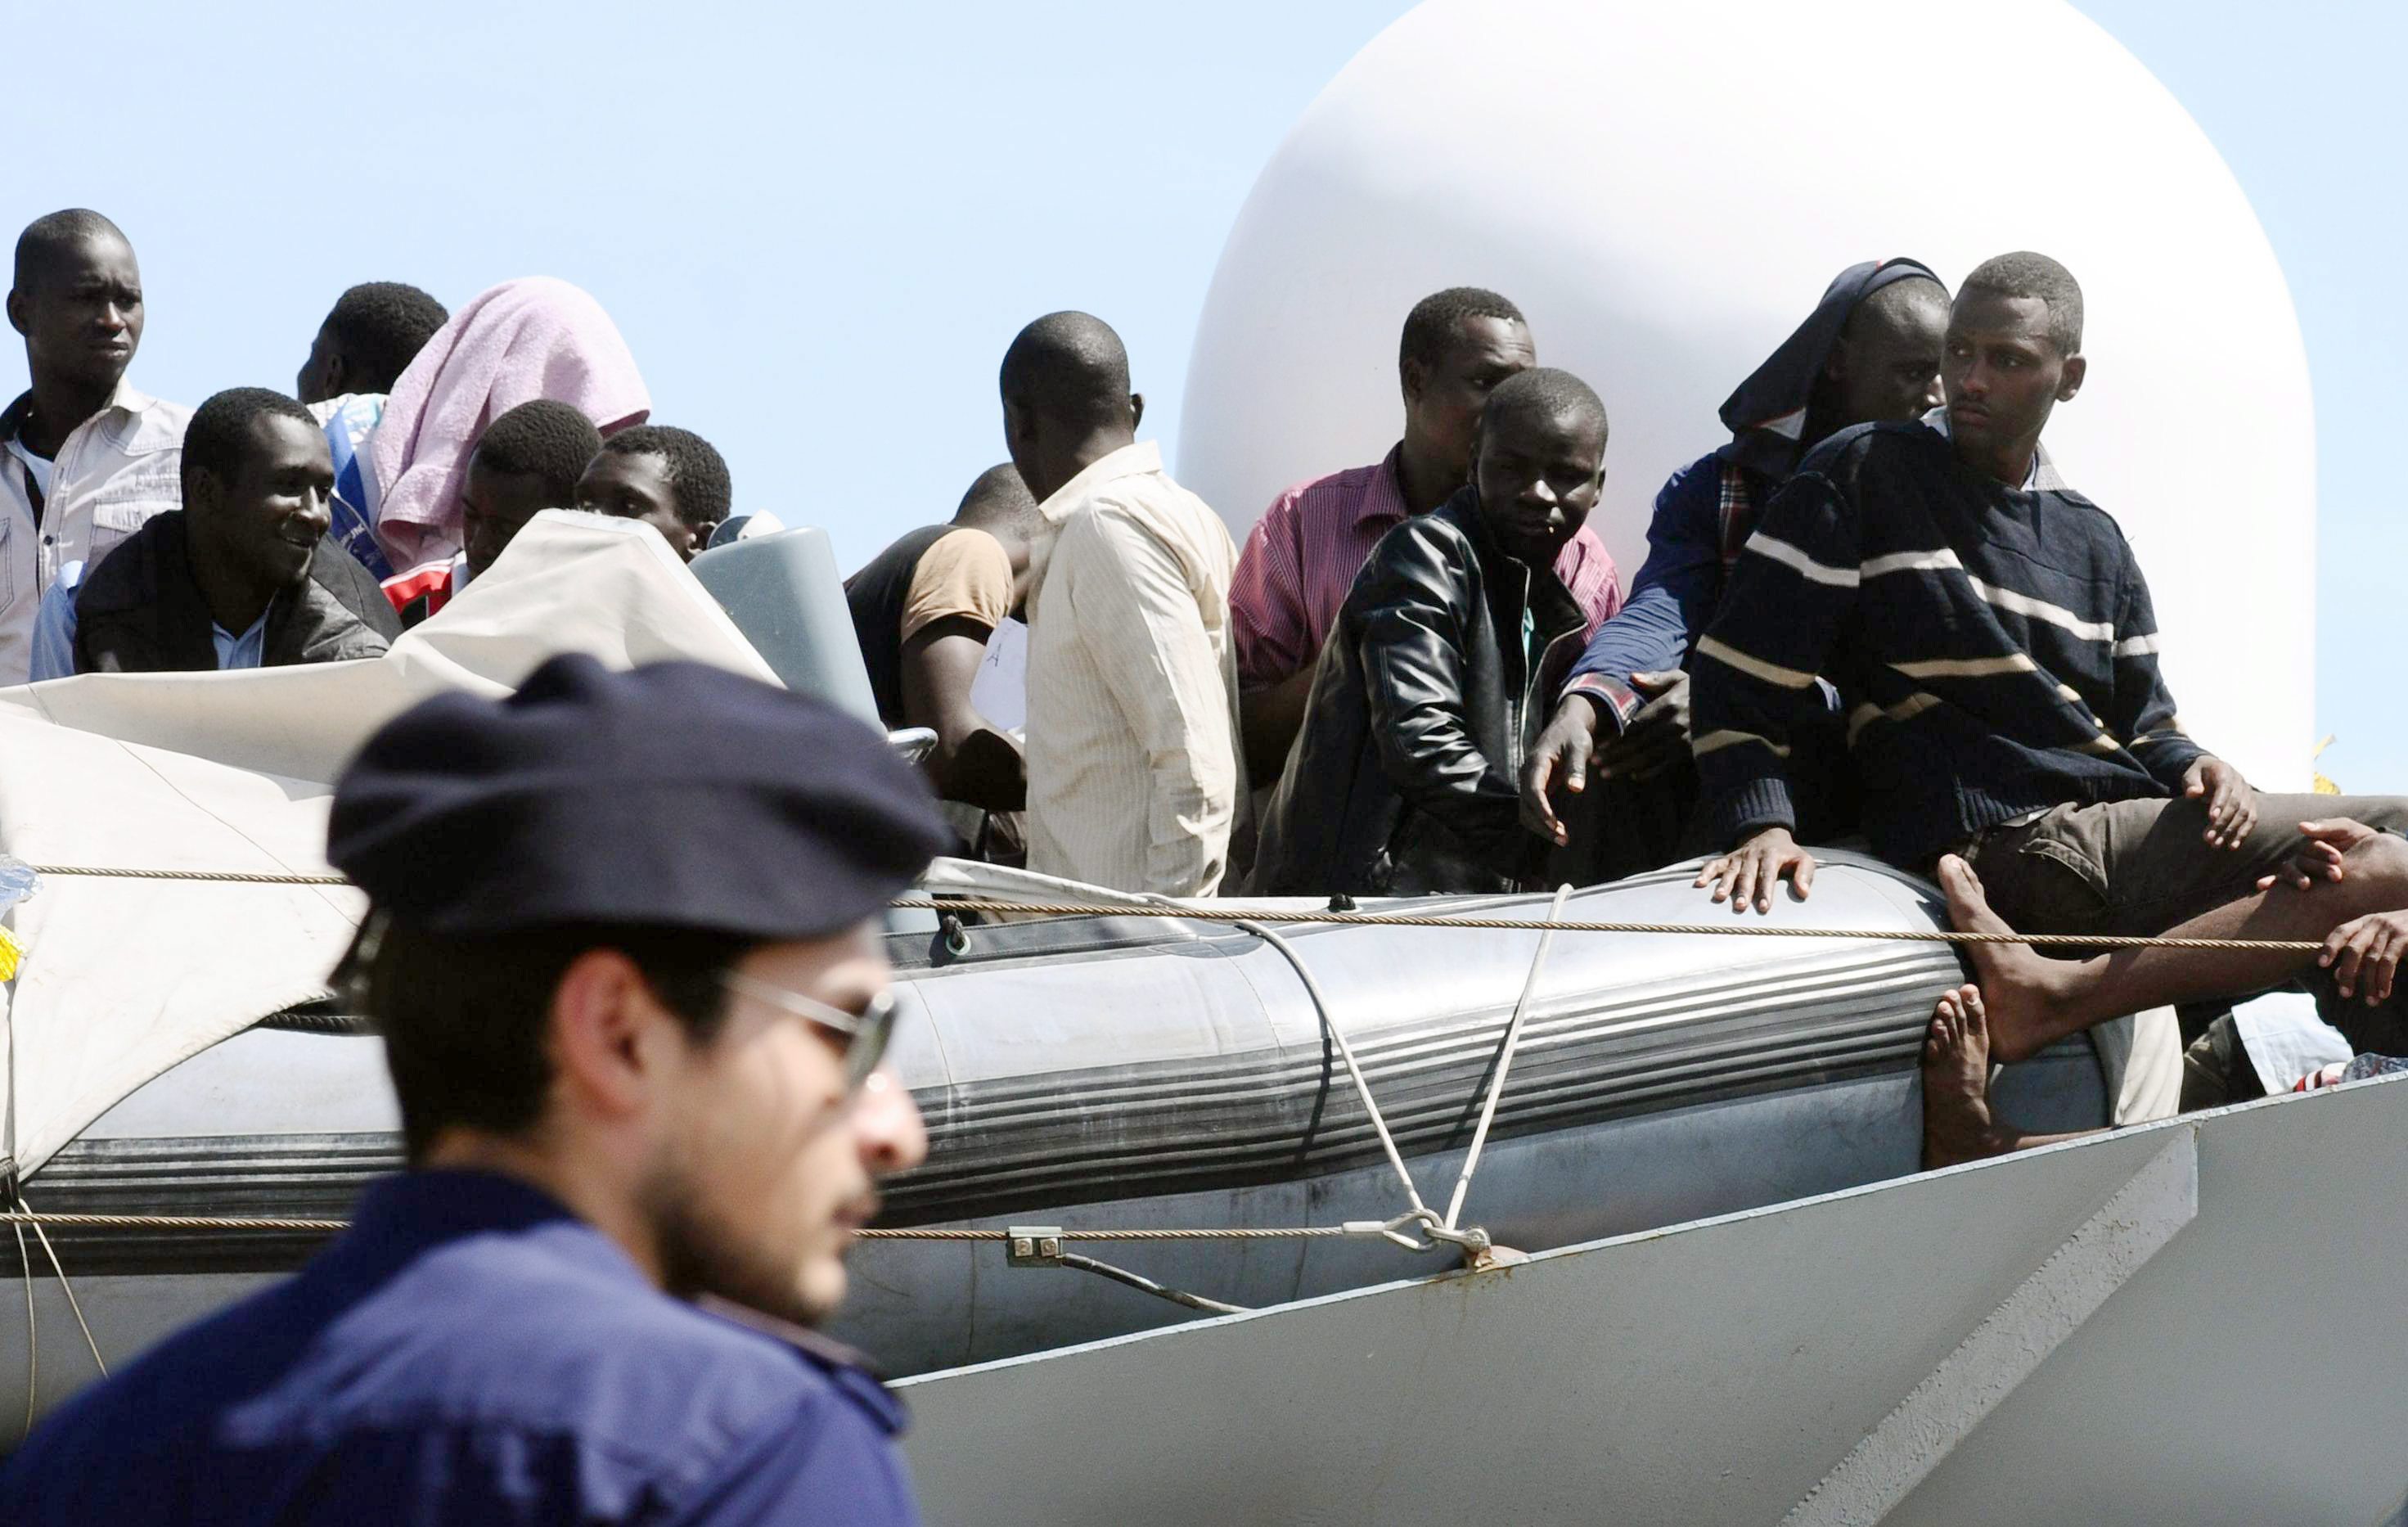 Nέα τραγωδία με τουλάχιστον 30 μετανάστες νεκρούς νότια της Σικελίας